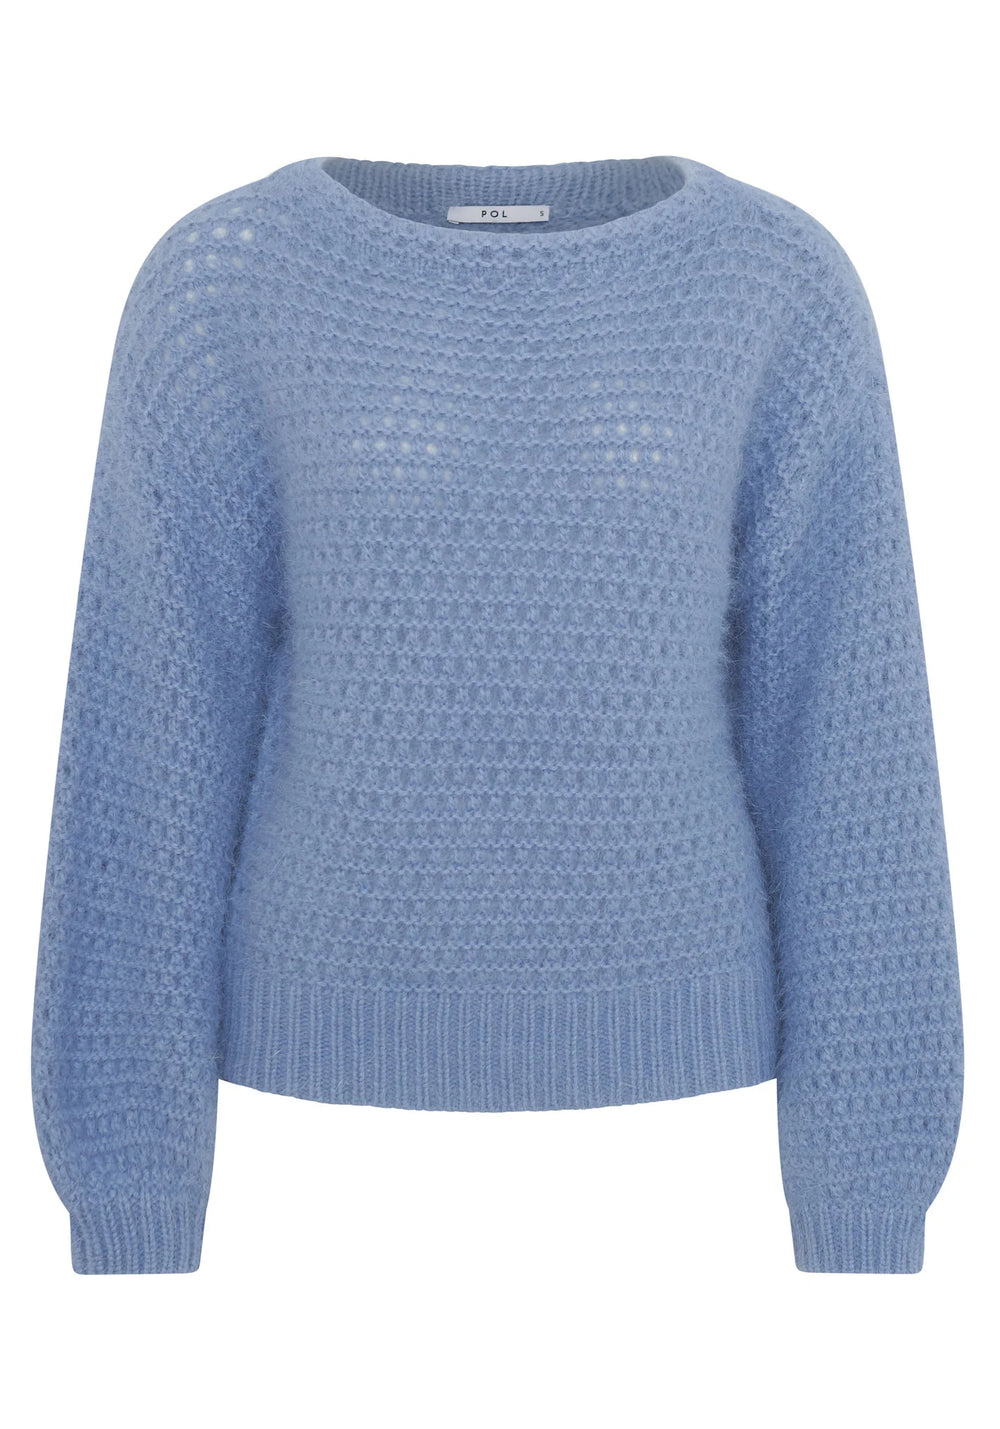 Genus Pointelle Knit - Light Blue knit POL   